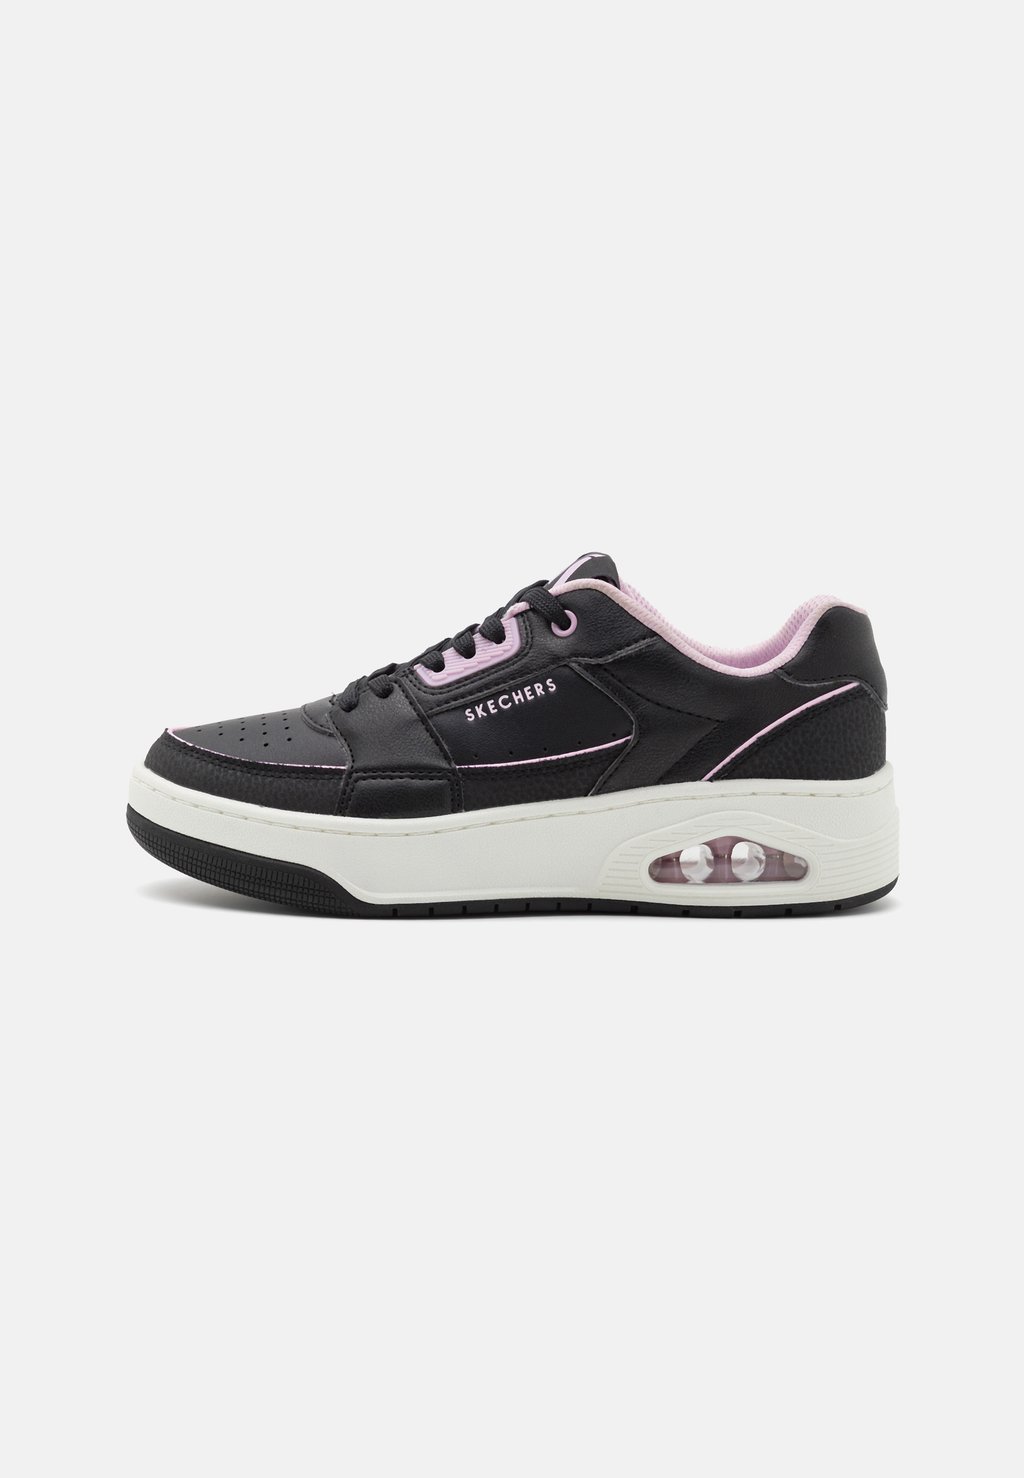 Низкие кроссовки Uno Court Skechers Sport, цвет black/pink кроссовки skechers sport glide step sport black pink